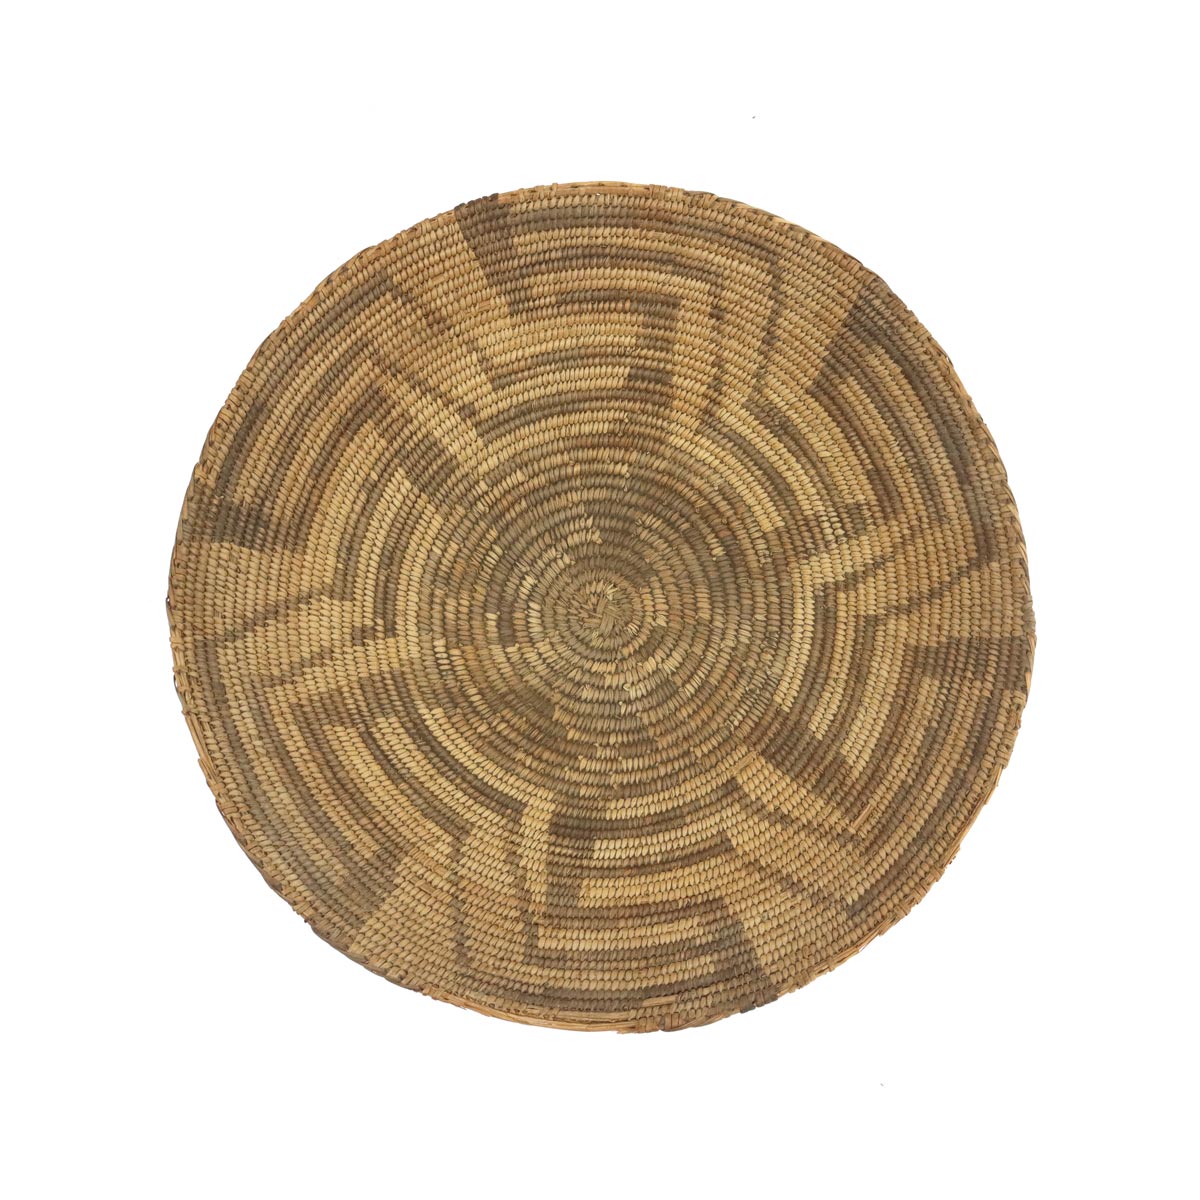 Pima Basket with Geometric Design c. 1890s, 3.25" x 14.5" (SK3344)
